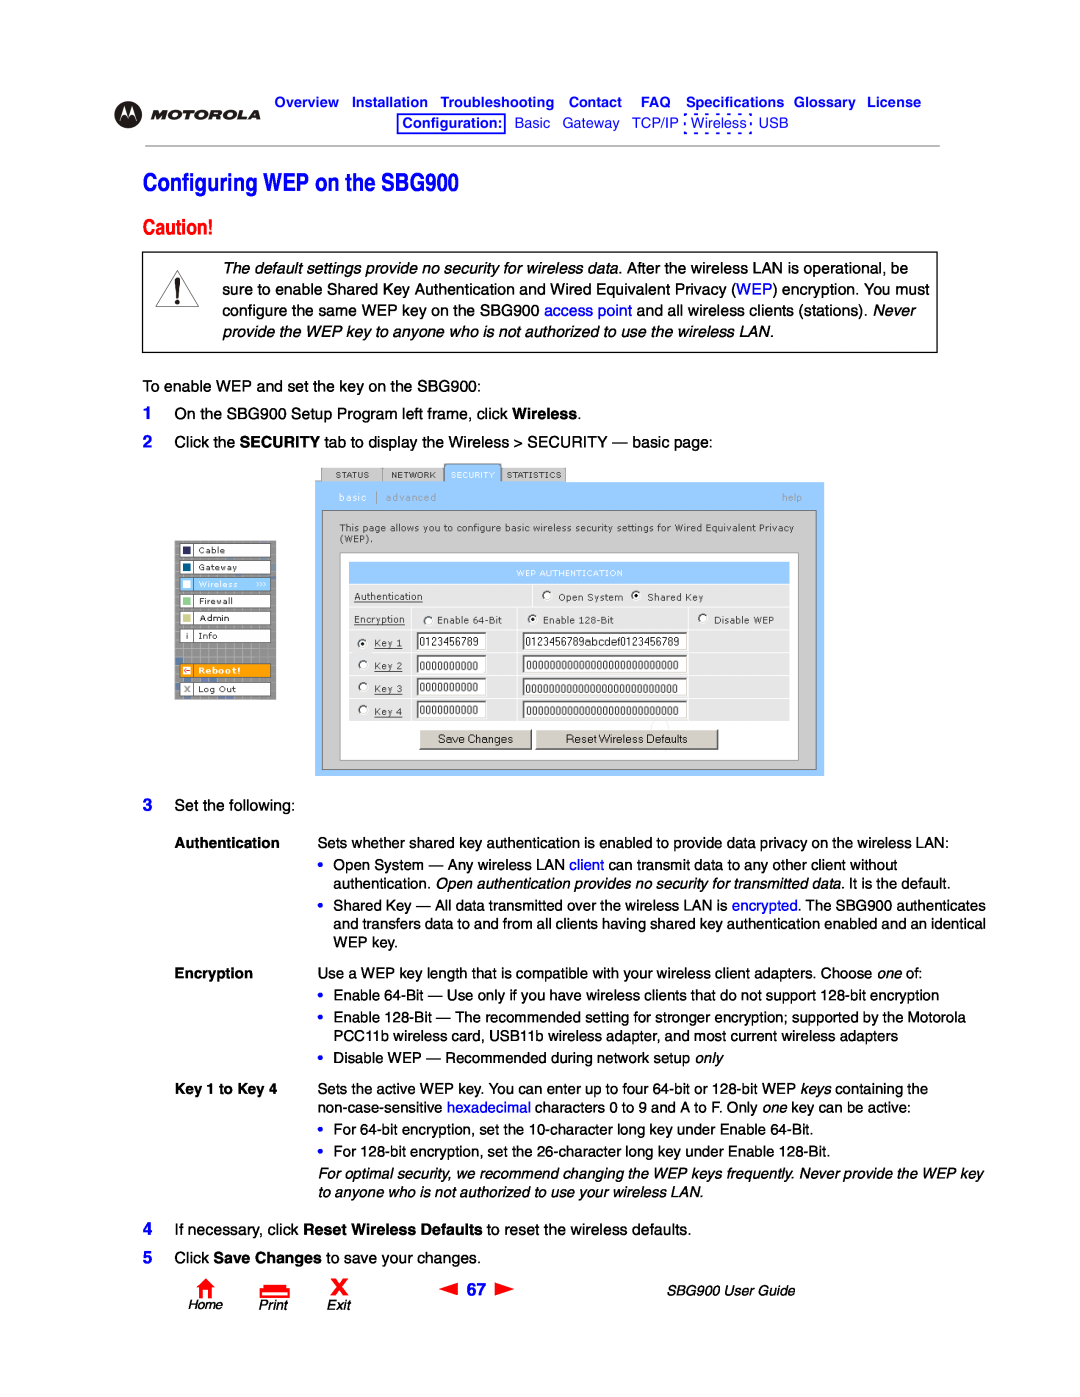 Motorola manual Configuring WEP on the SBG900, Encryption, Home Print Exit 